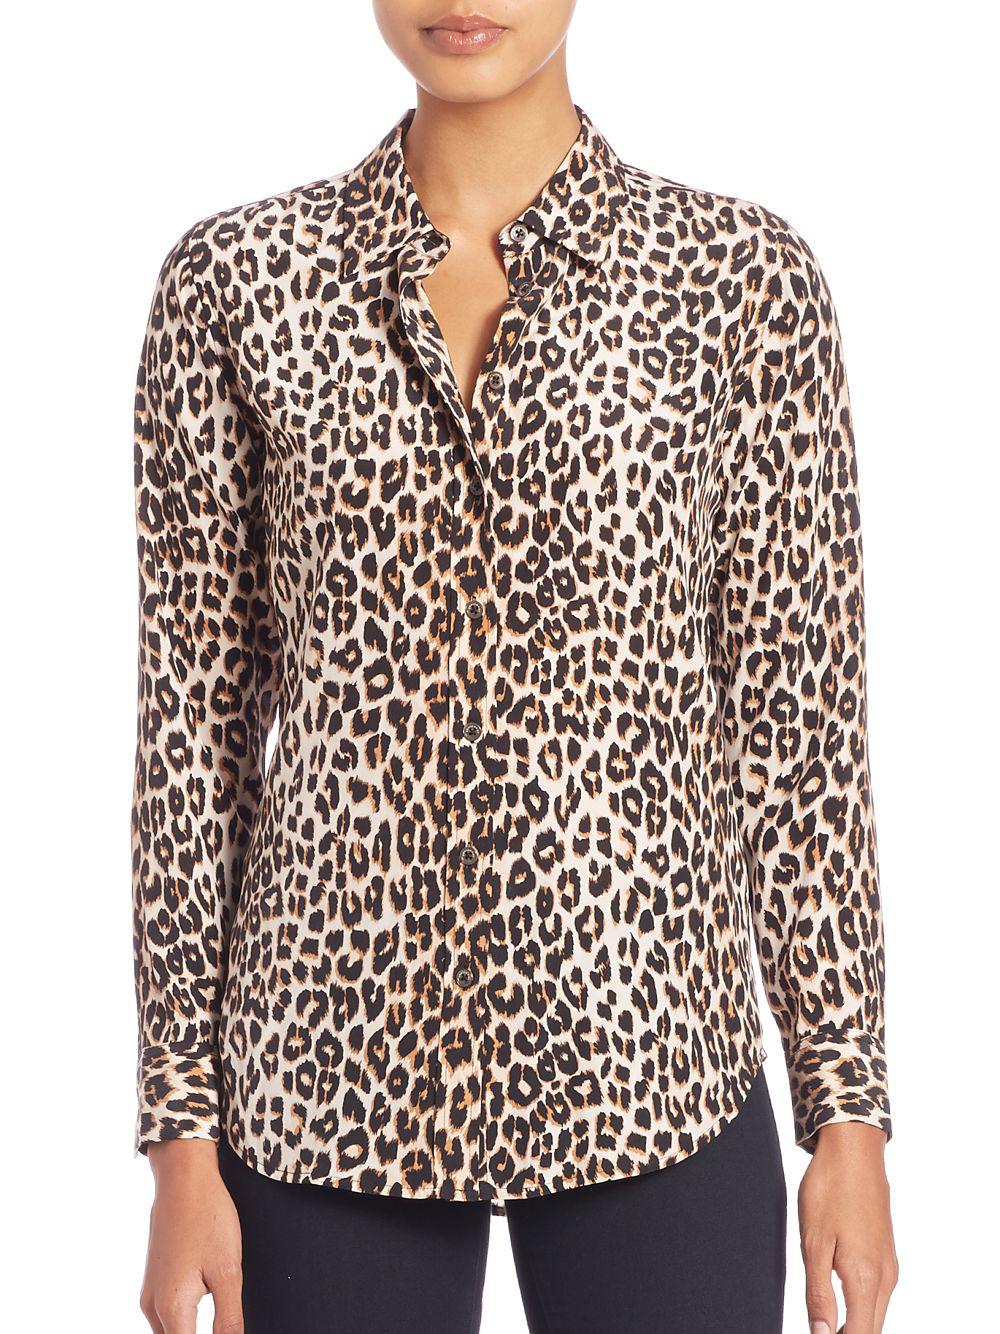 Equipment Kate Moss For Leopard-print Silk Blouse | Lyst